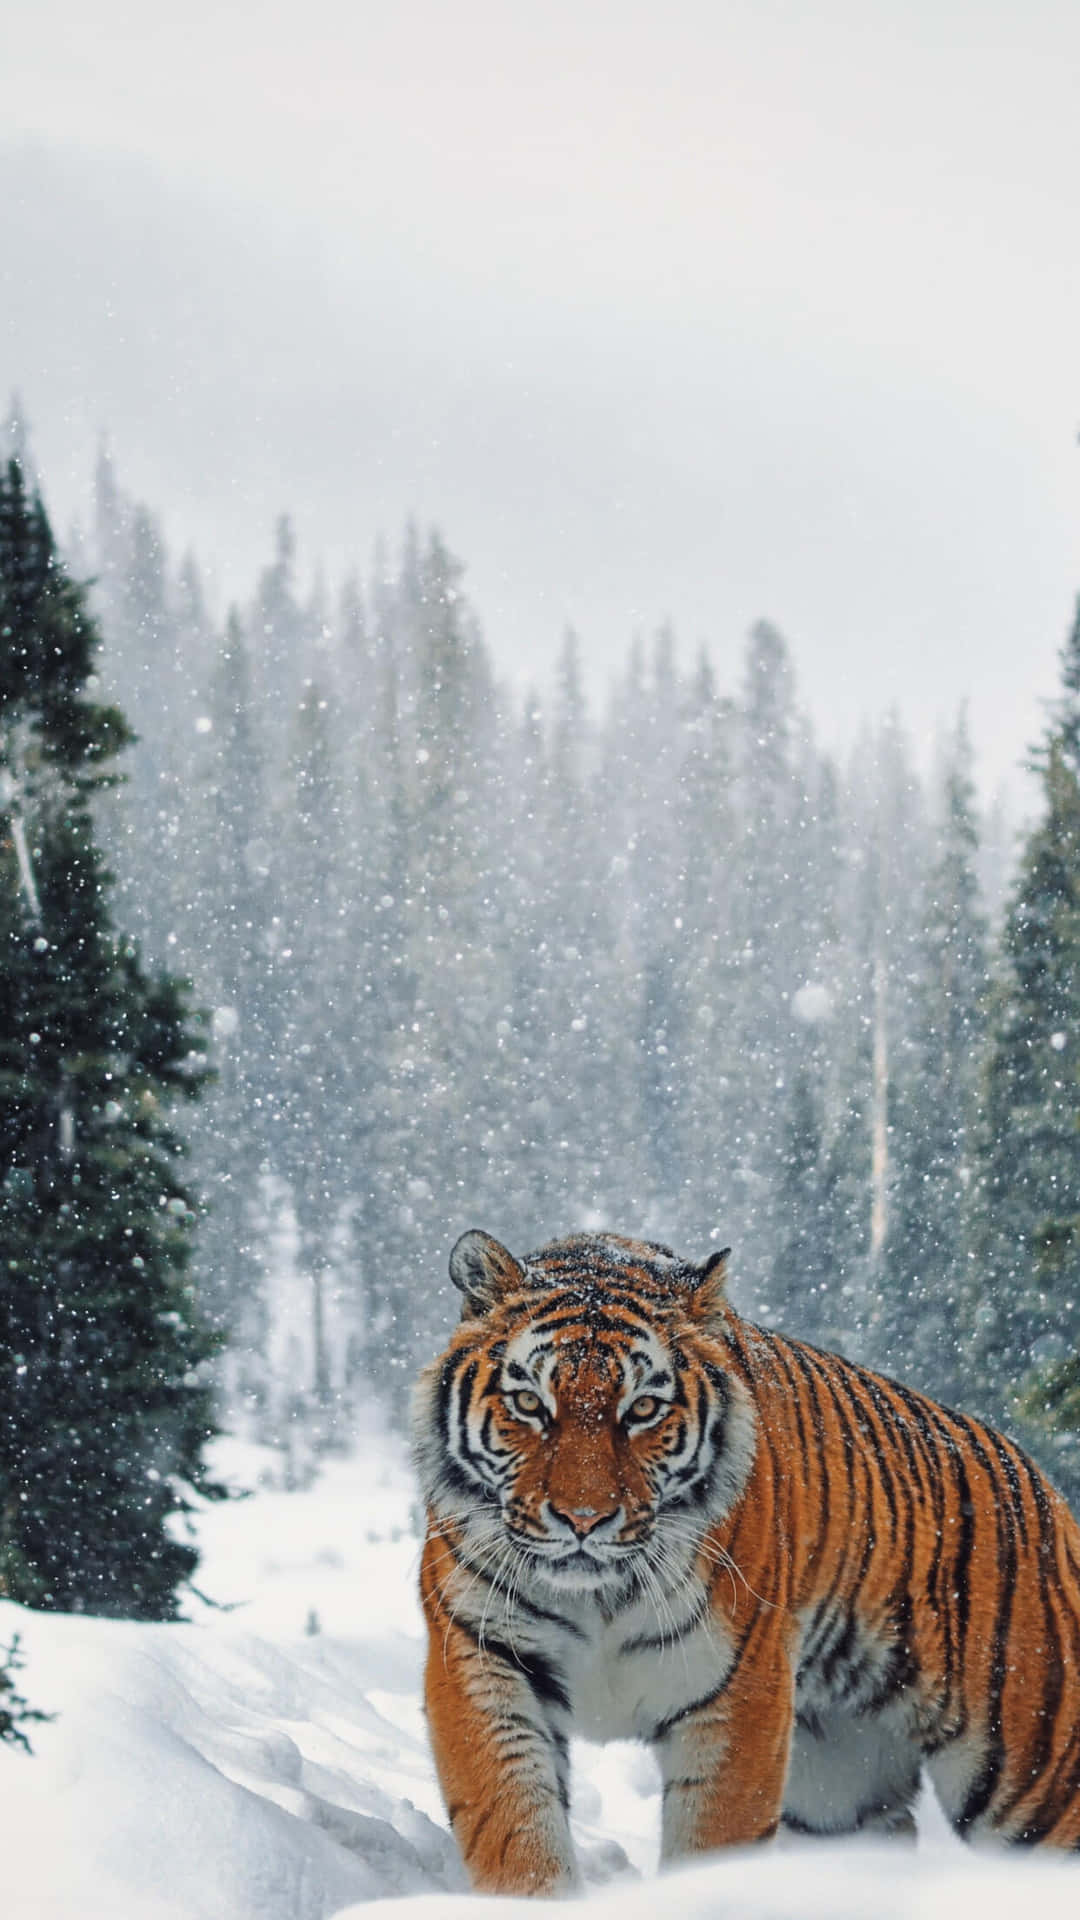 Siberian Tigerin Snowy Forest Wallpaper